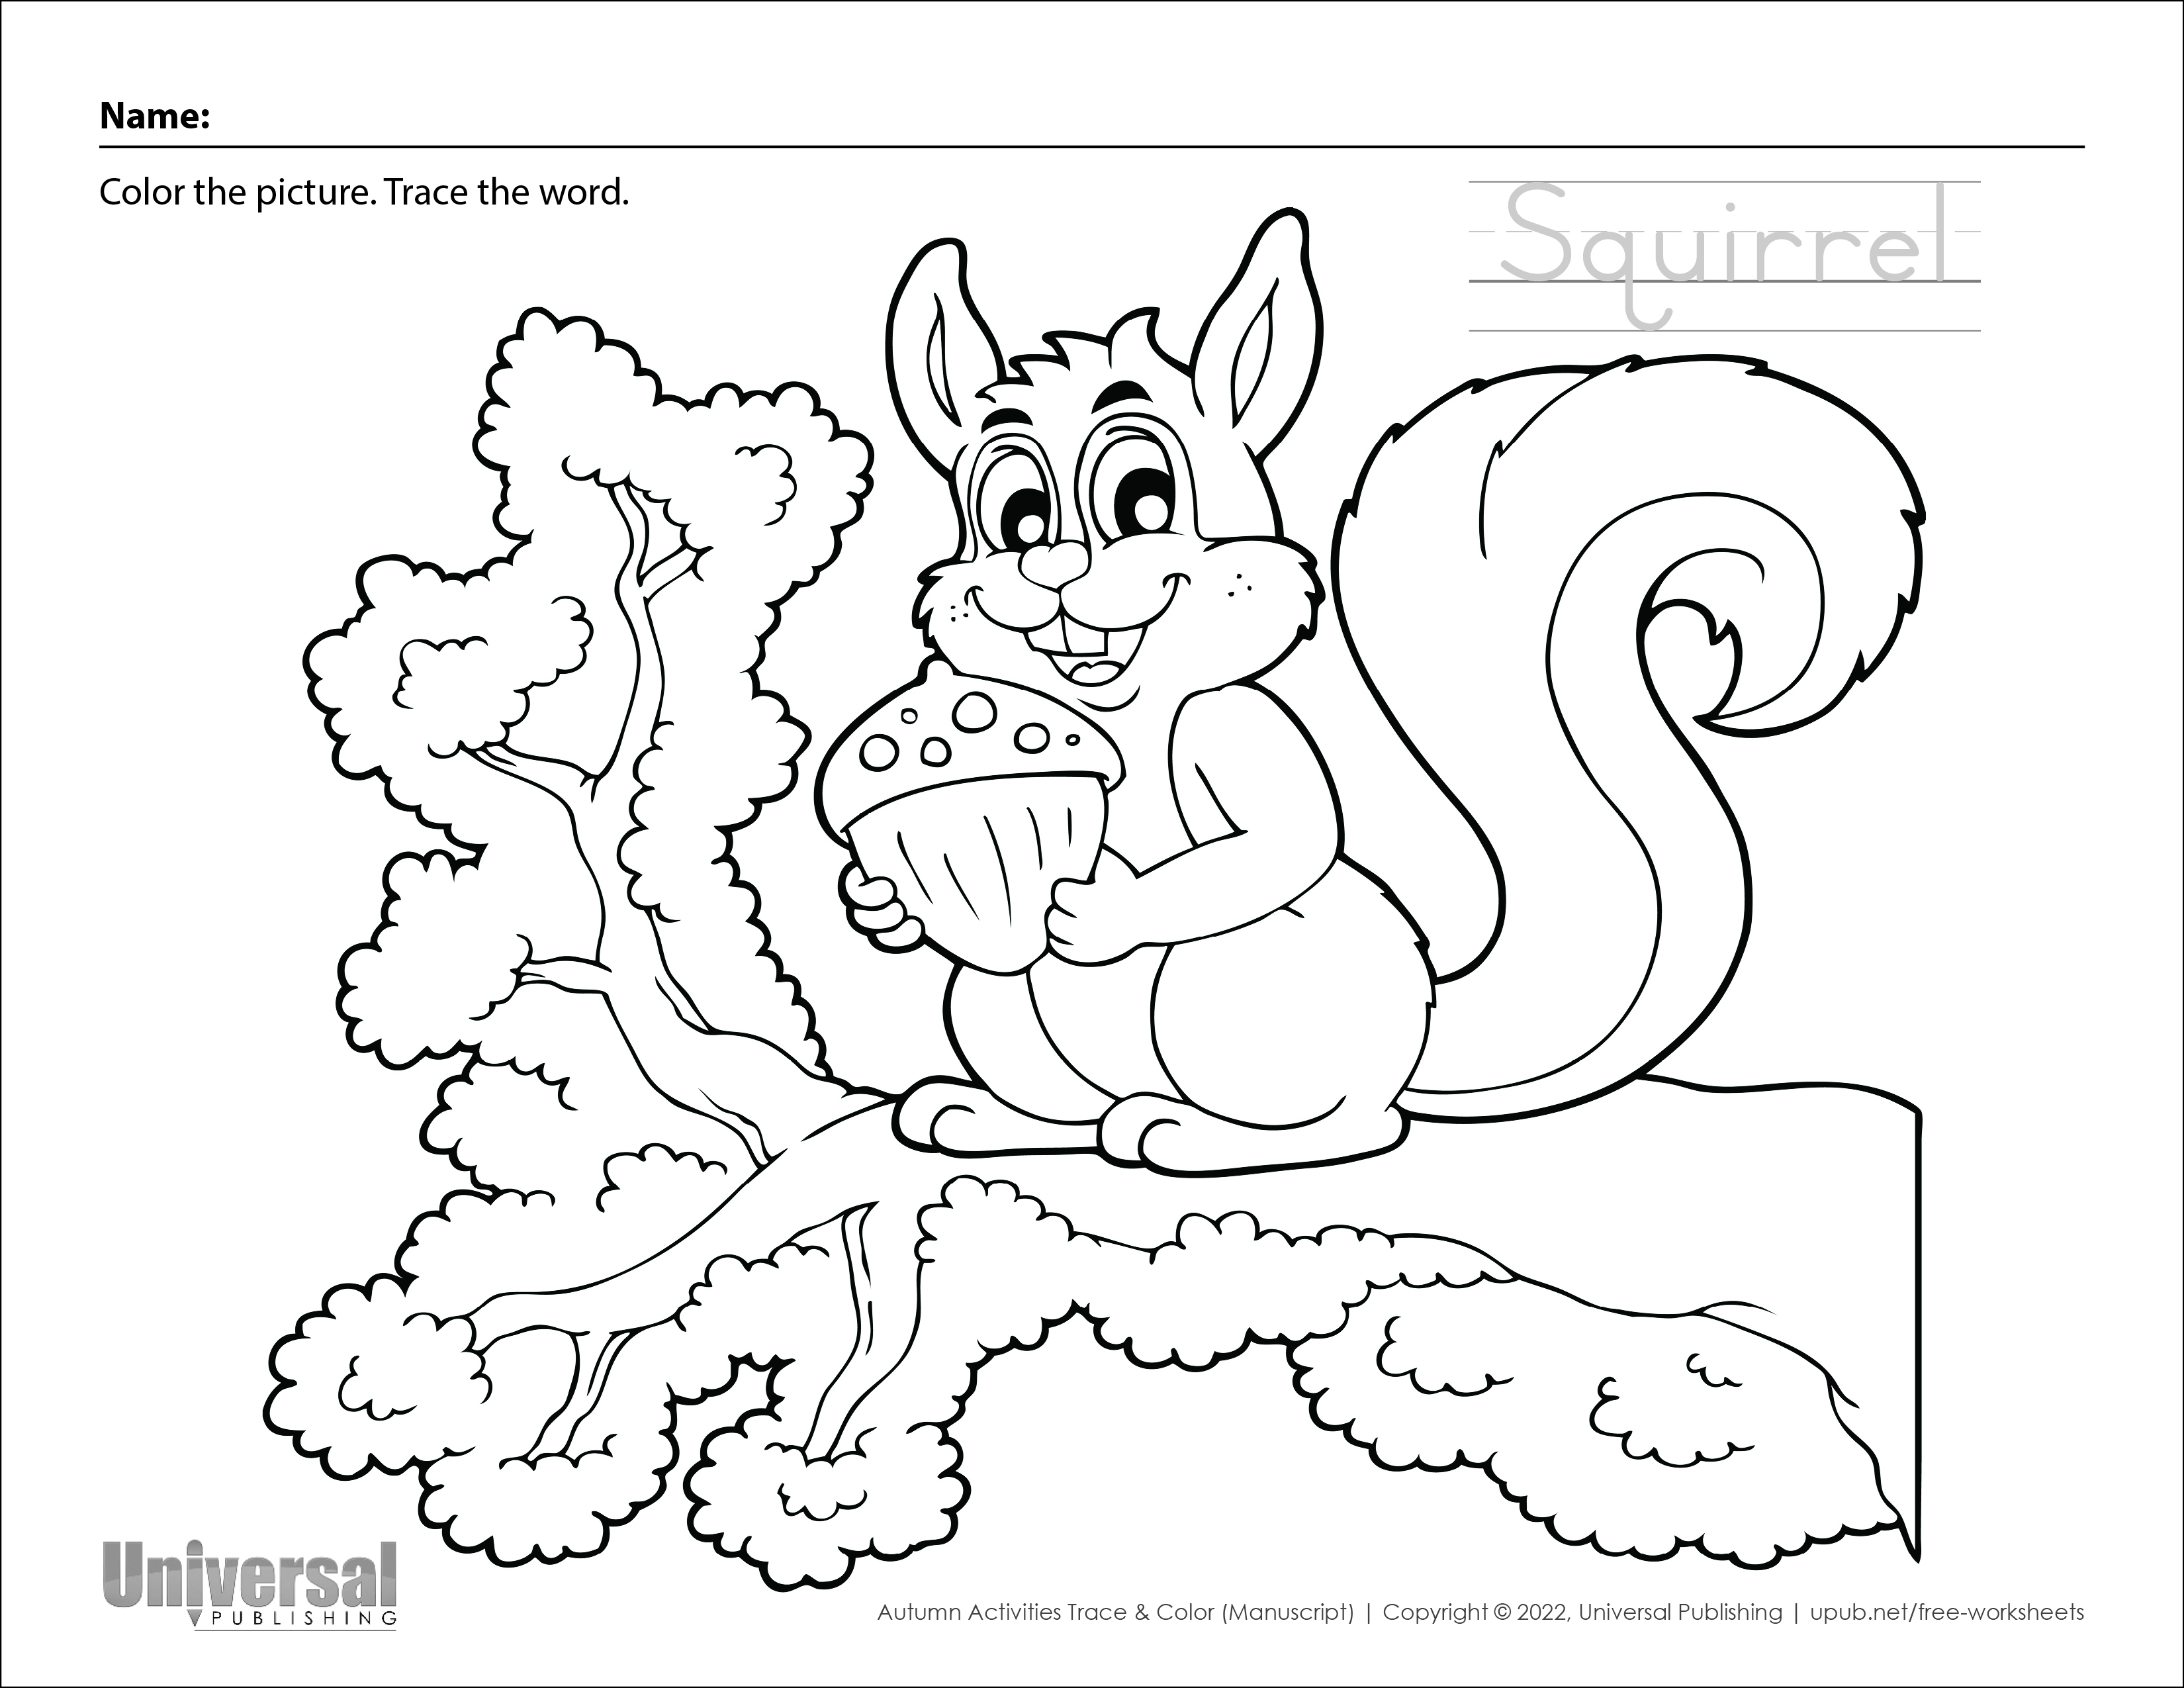 Fall Squirrel Color and Trace Manuscript Activity